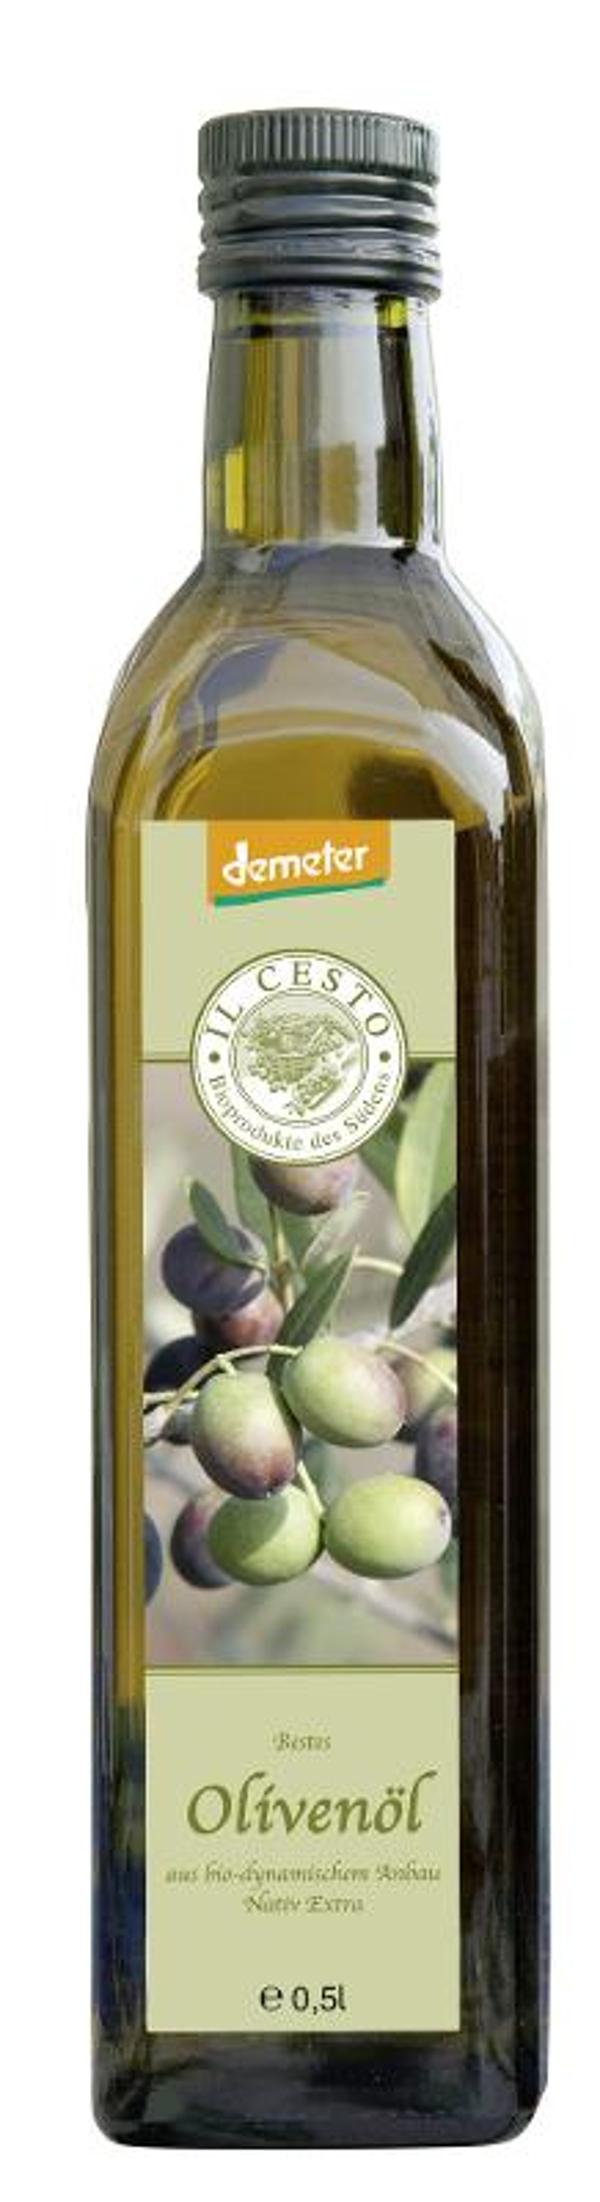 Produktfoto zu Olivenöl nativ extra 0,5l Il Cesto